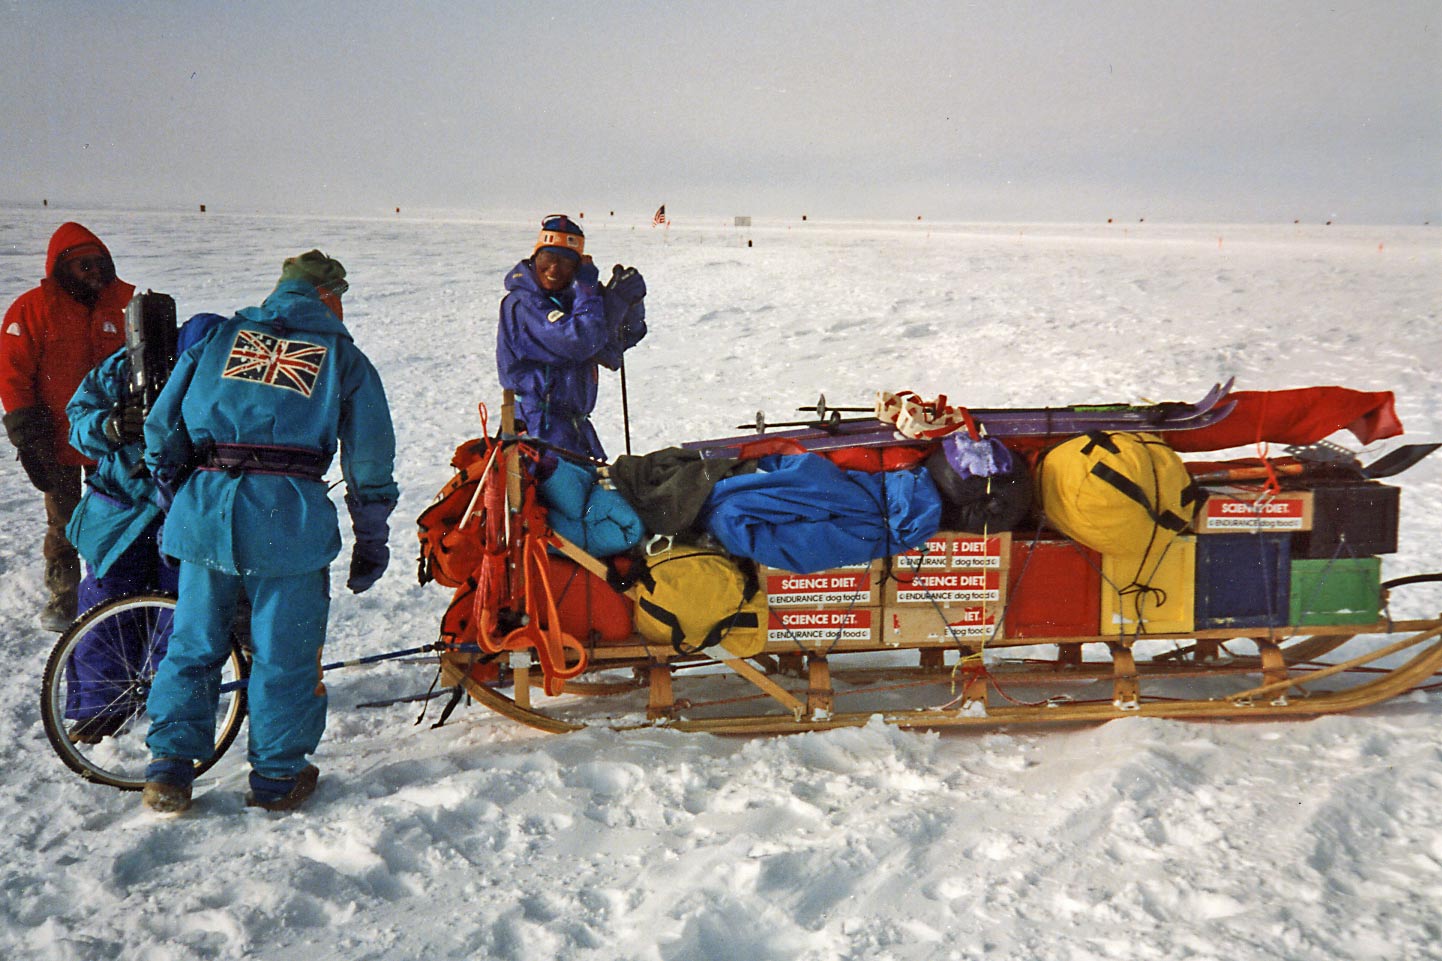 The International Trans-Antarctica Expedition